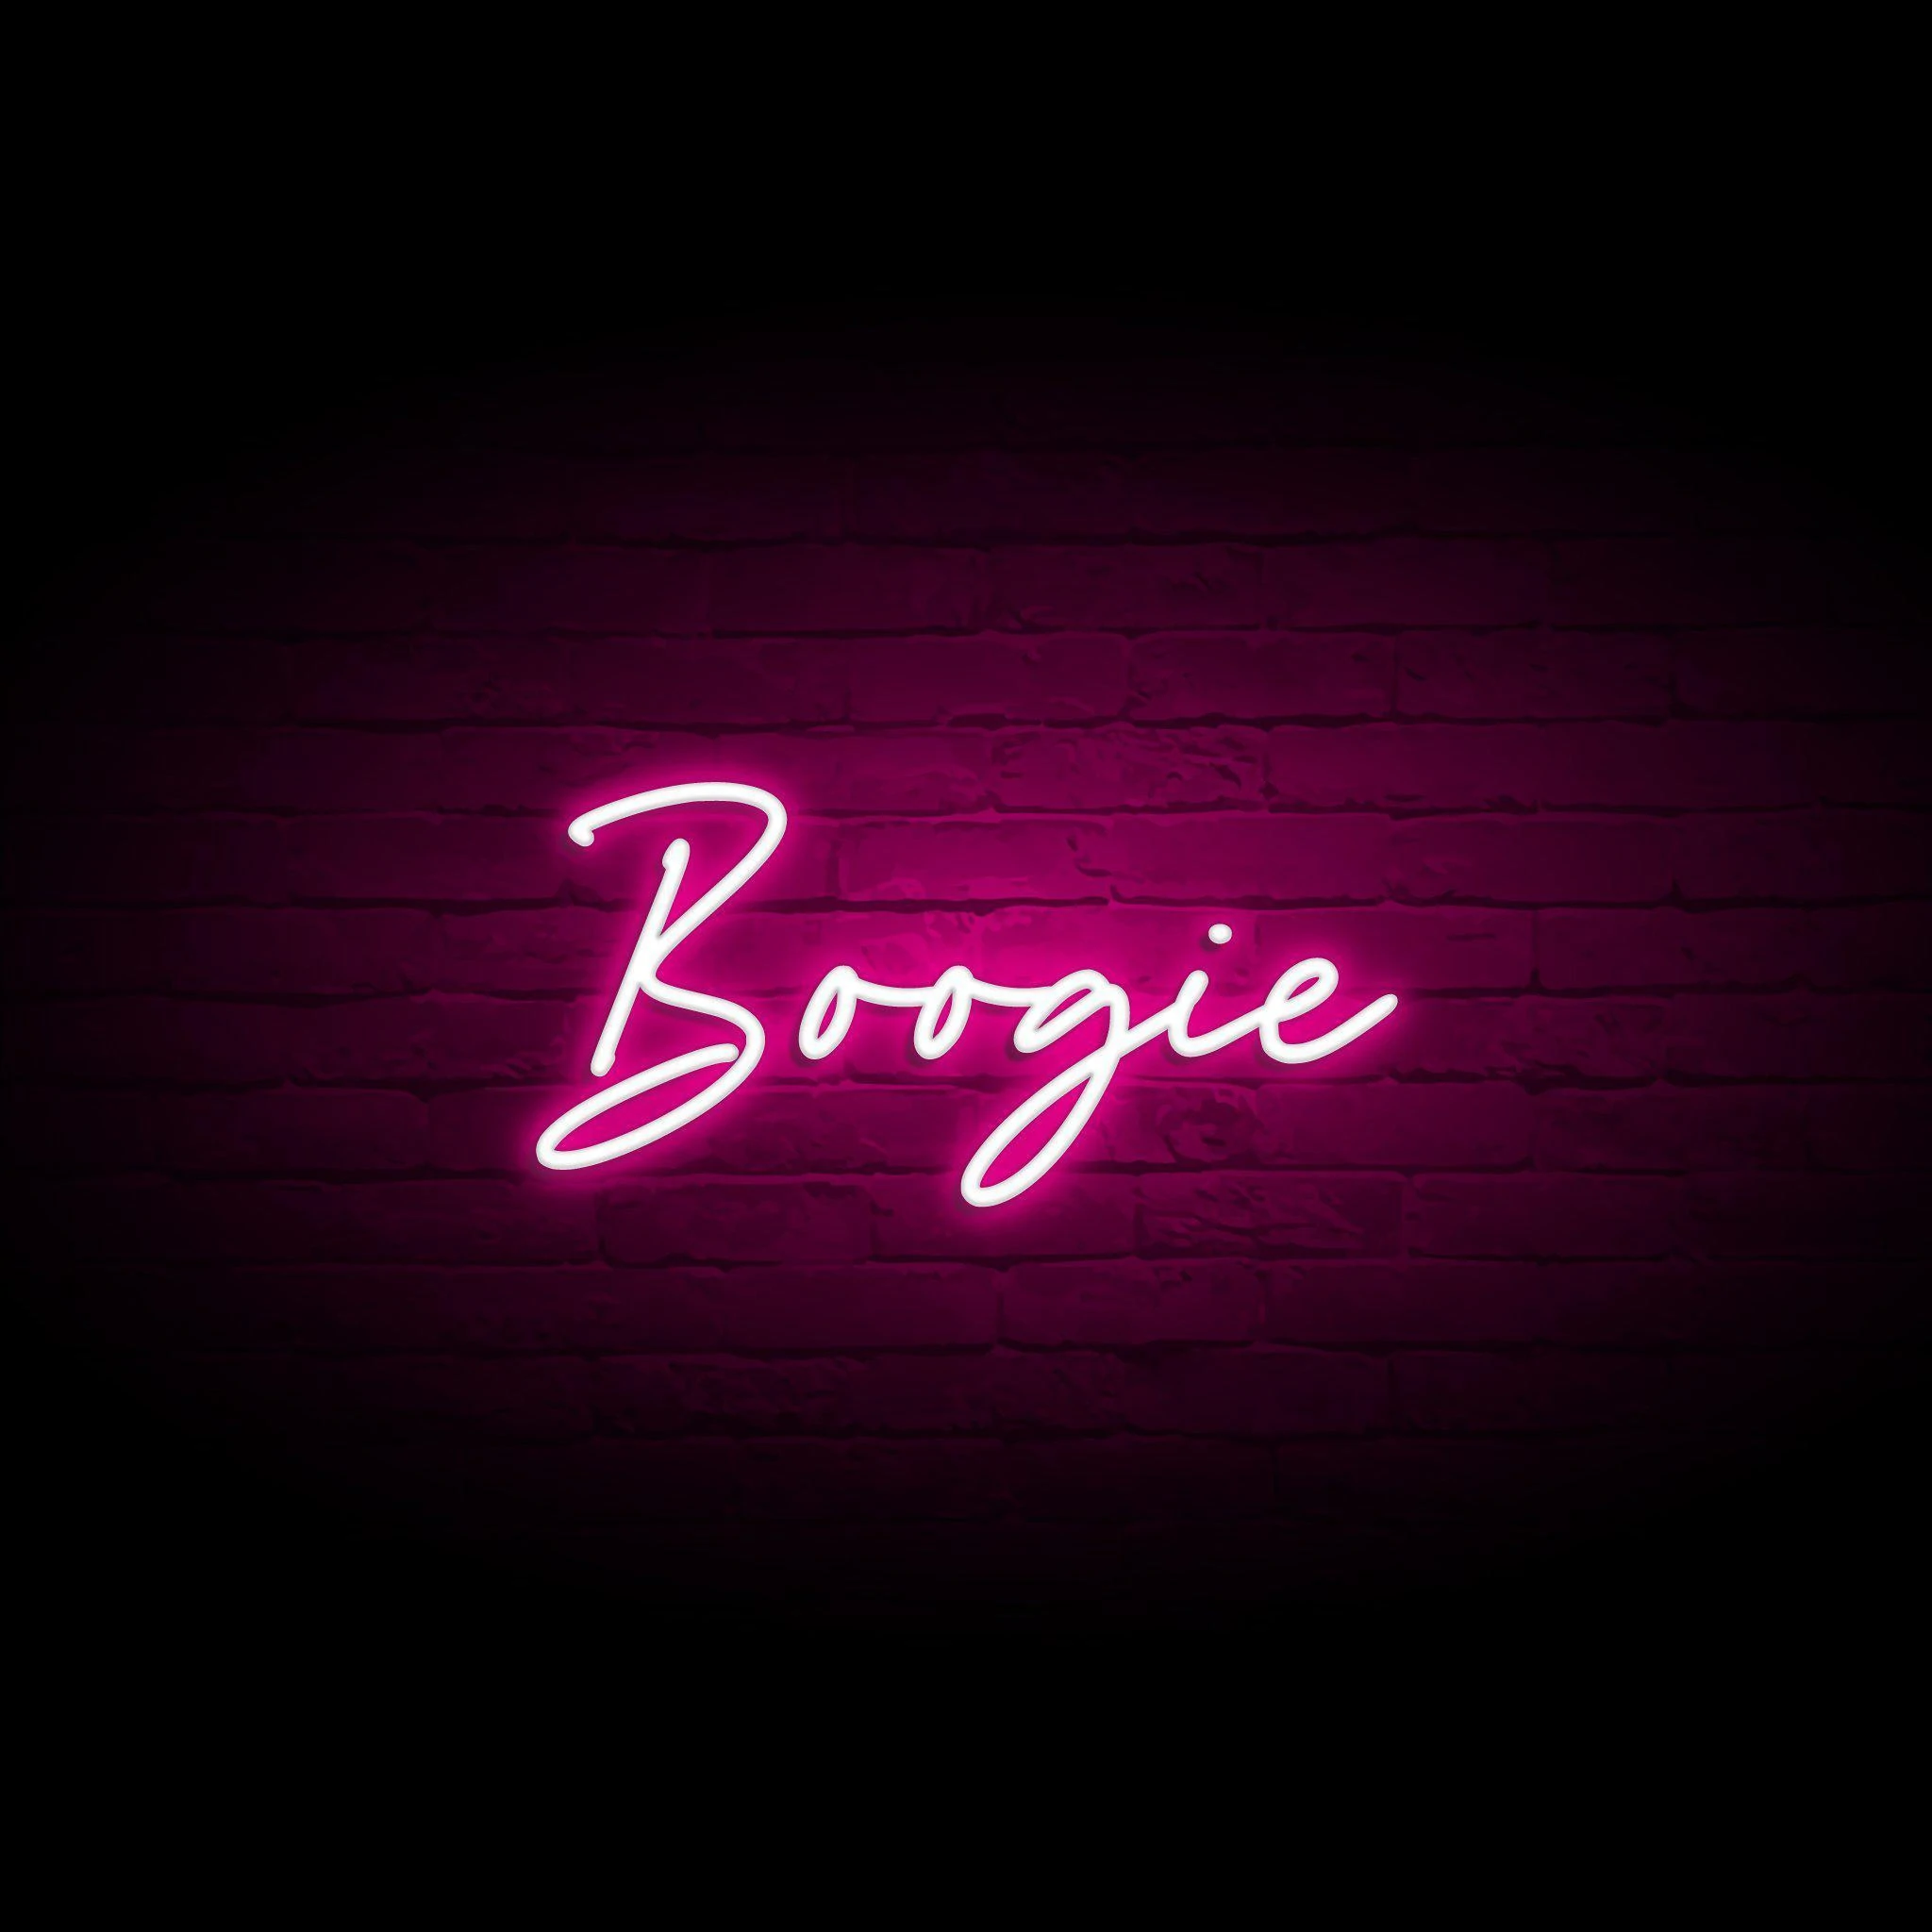 'BOOGIE' NEON SIGN - NeonFerry